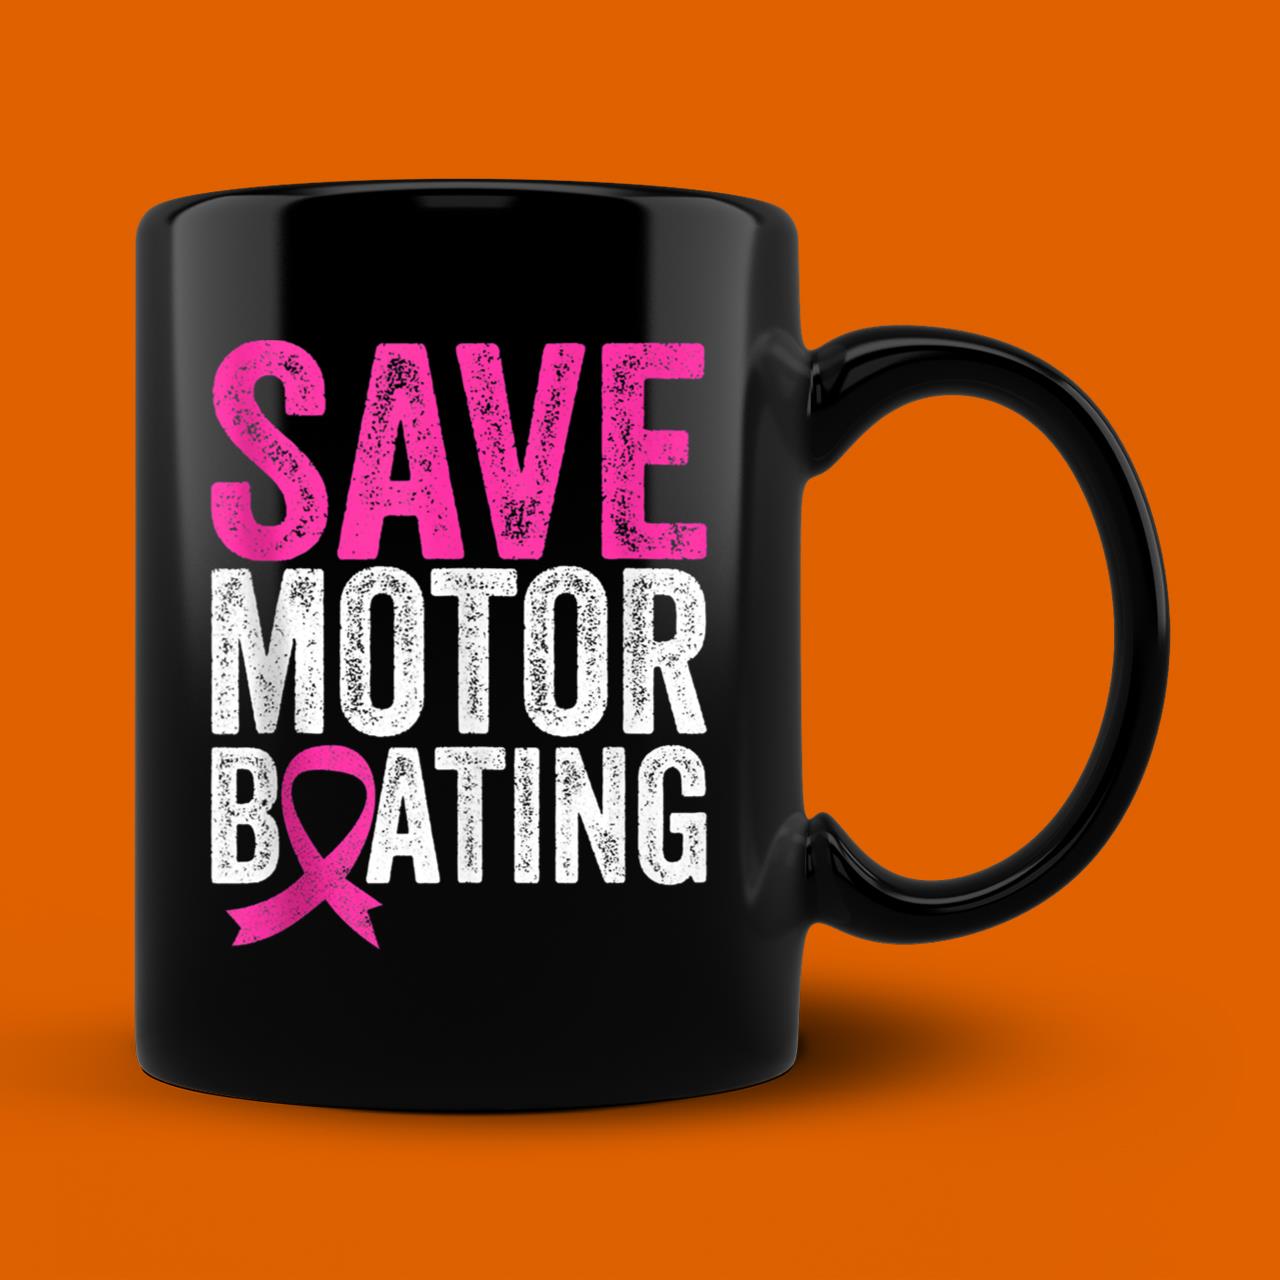 Save Motorboating Funny Breast Cancer Awareness Shirt